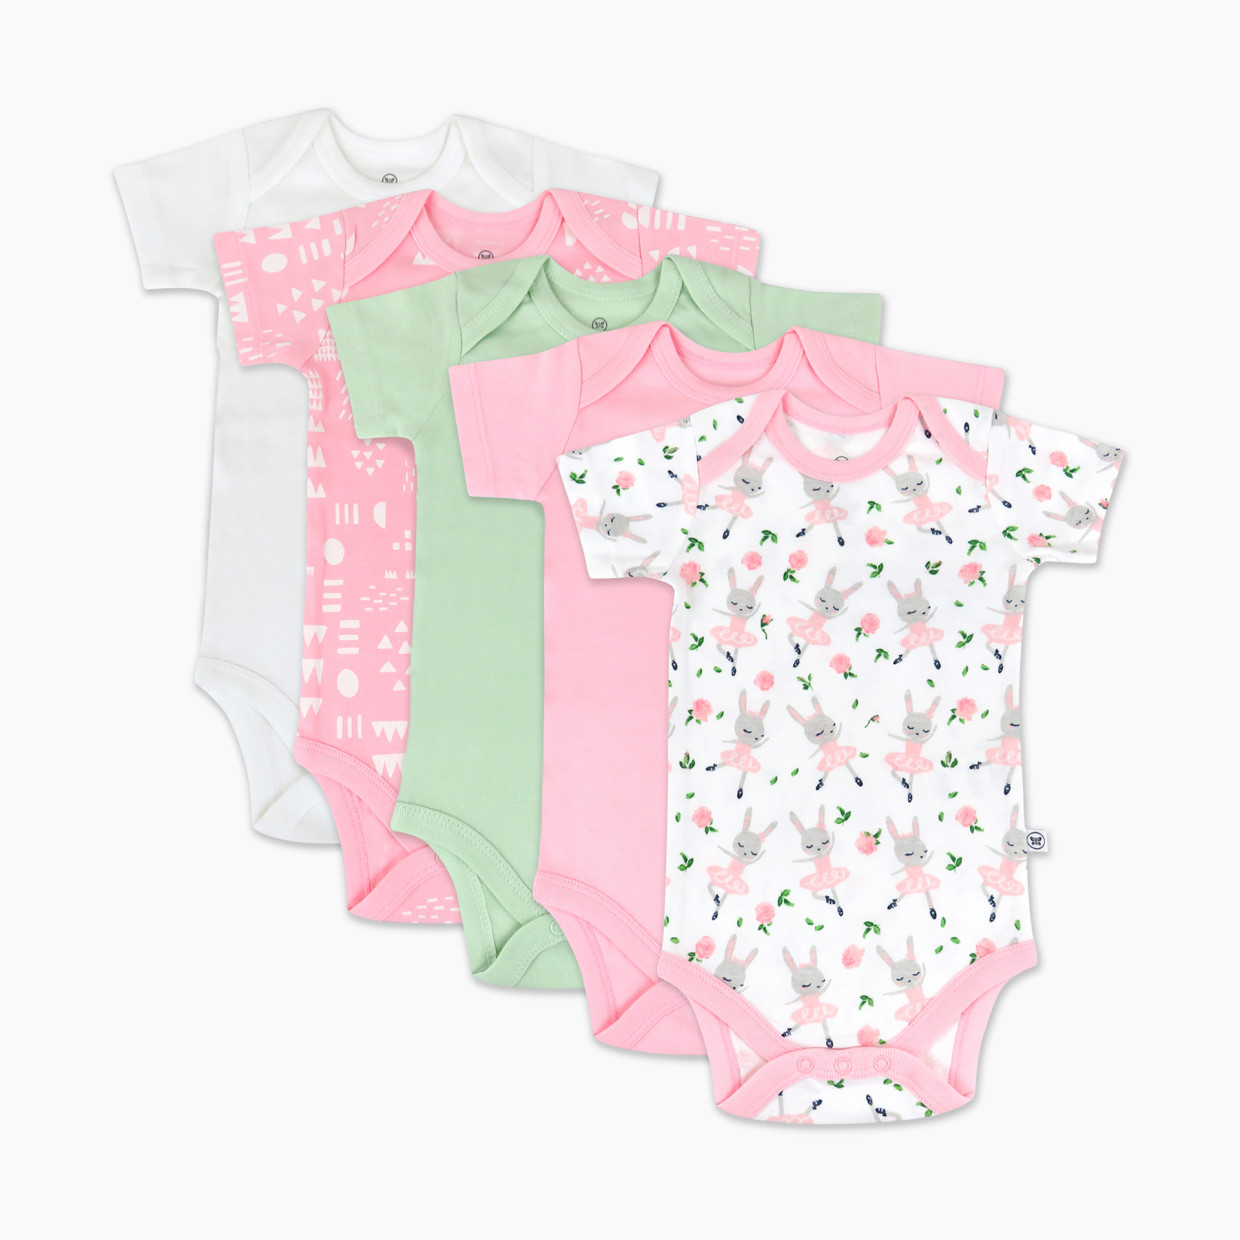 Honest Baby Clothing 5-Pack Organic Cotton Short Sleeve Bodysuit - Tutu Cute, 3-6 M, 5.